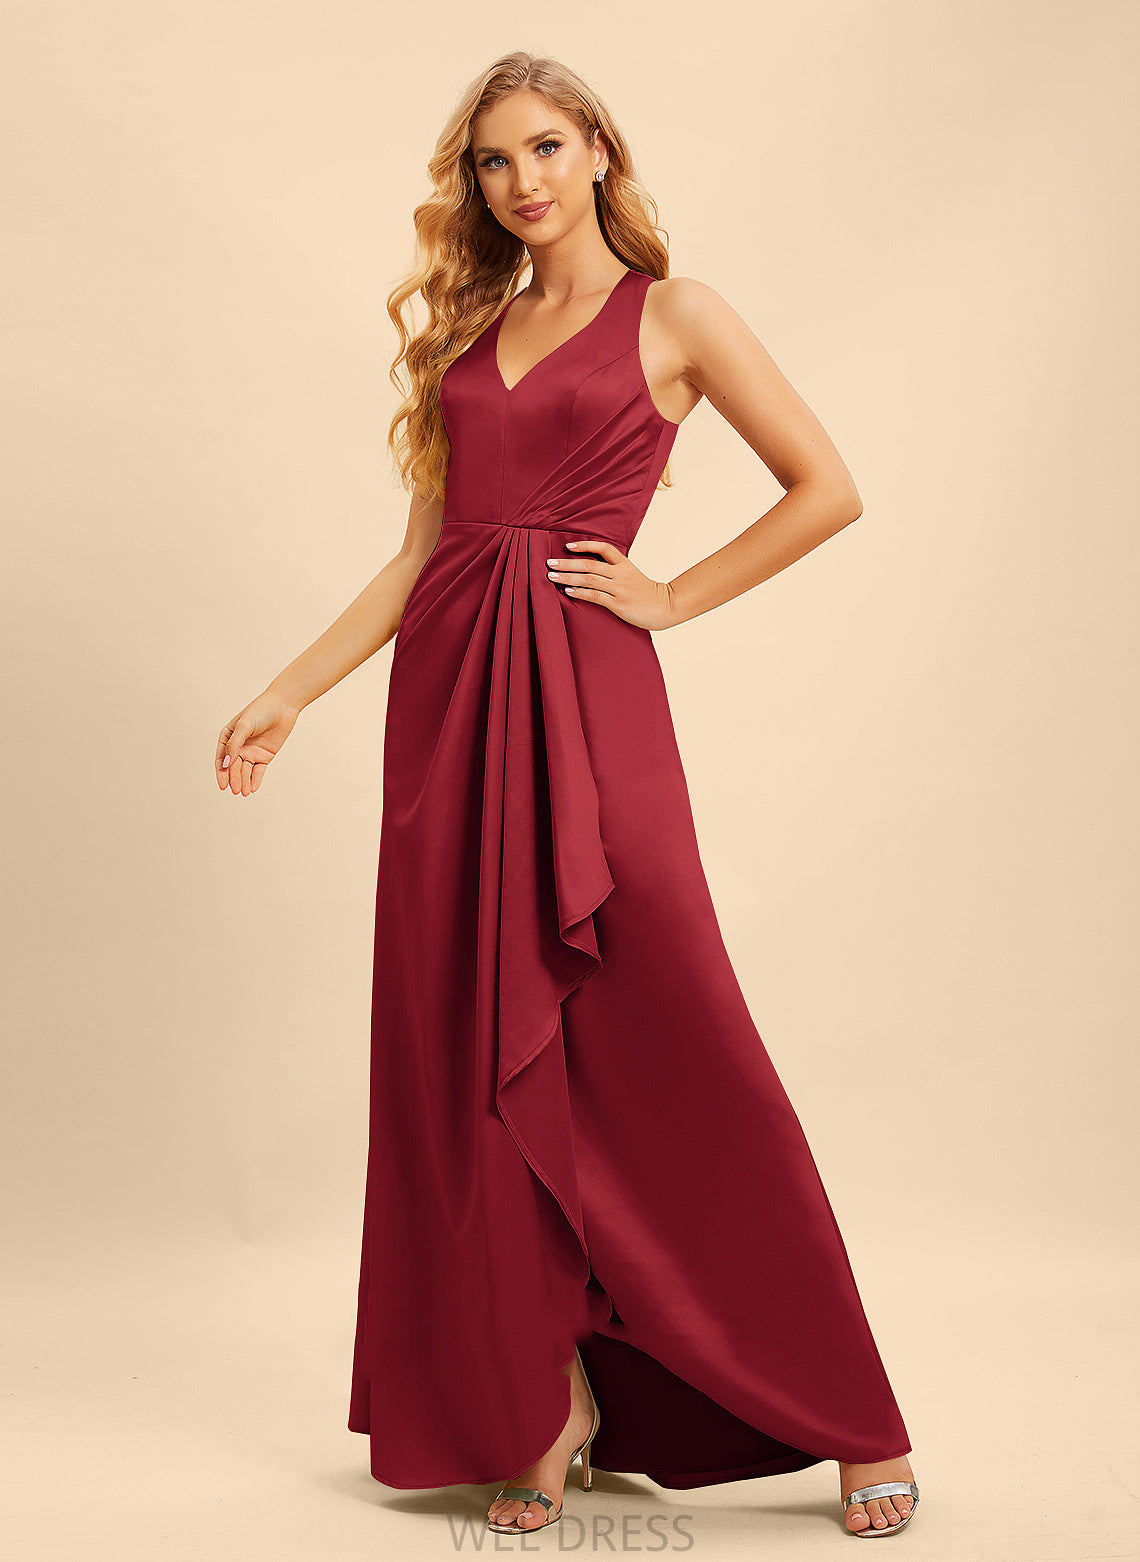 Ruffle V-neck Floor-Length SplitFront Silhouette Neckline Fabric A-Line Embellishment Length Lilah Sleeveless Bridesmaid Dresses